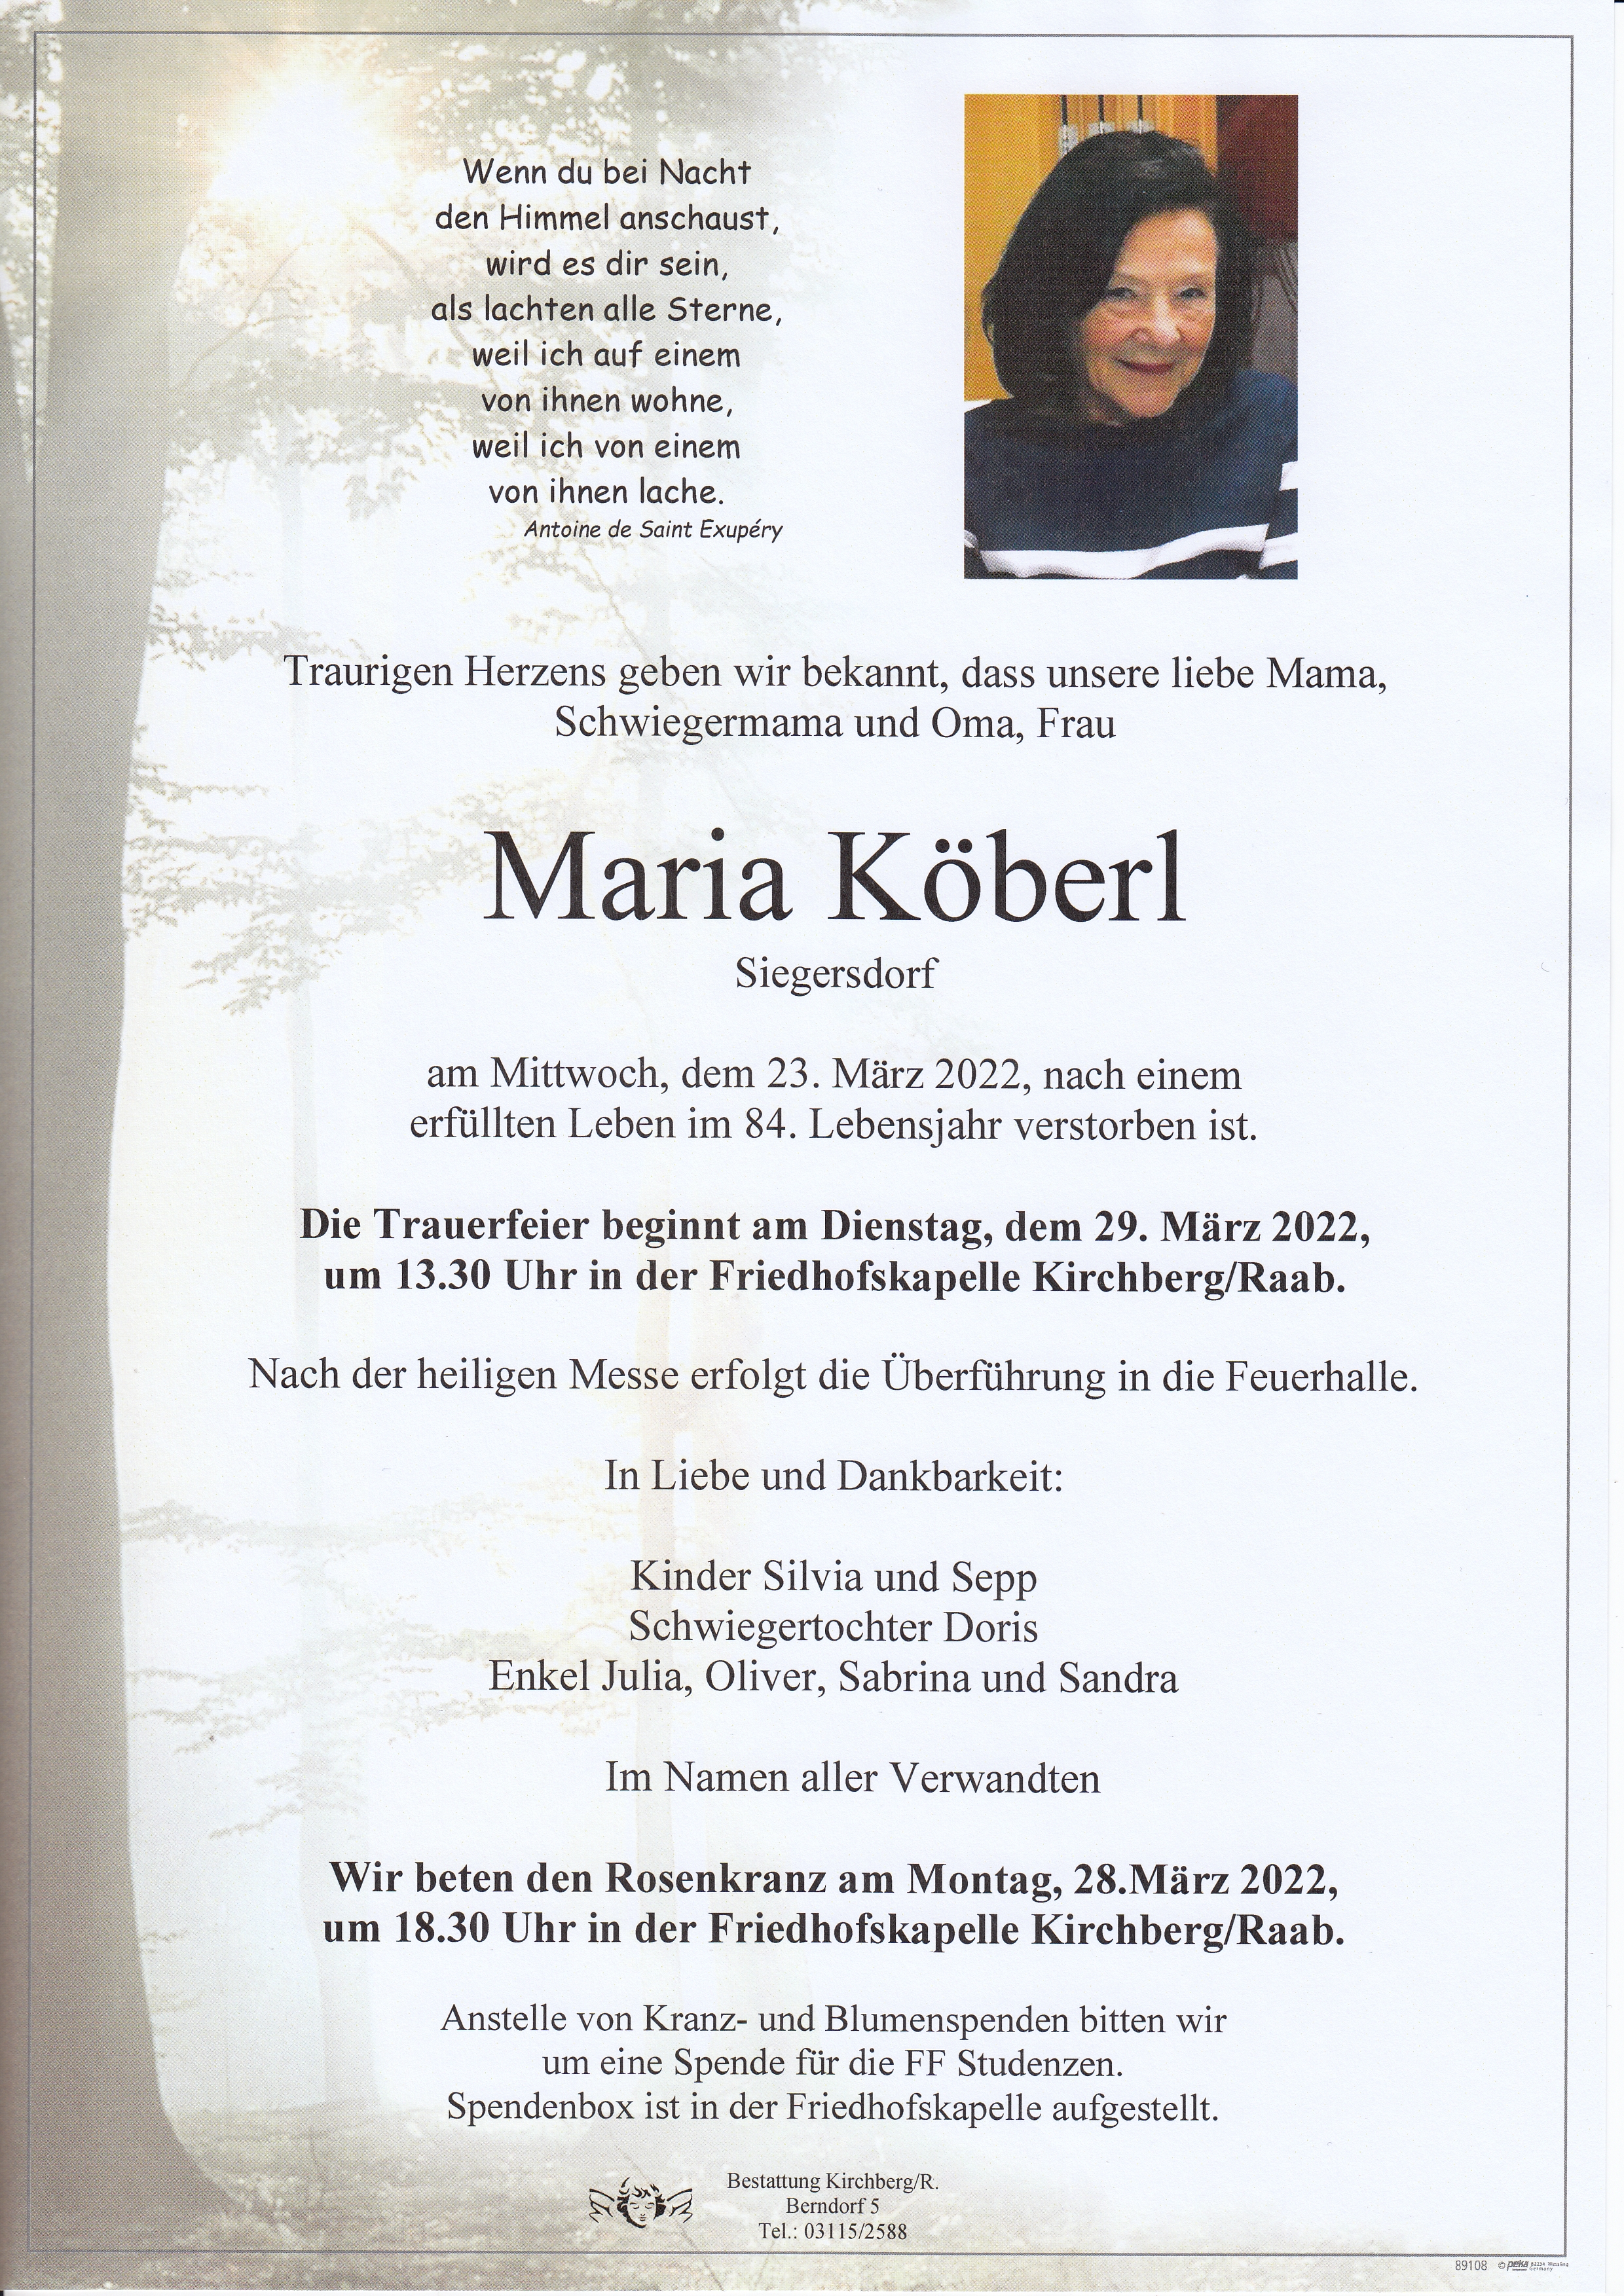 Maria Köberl